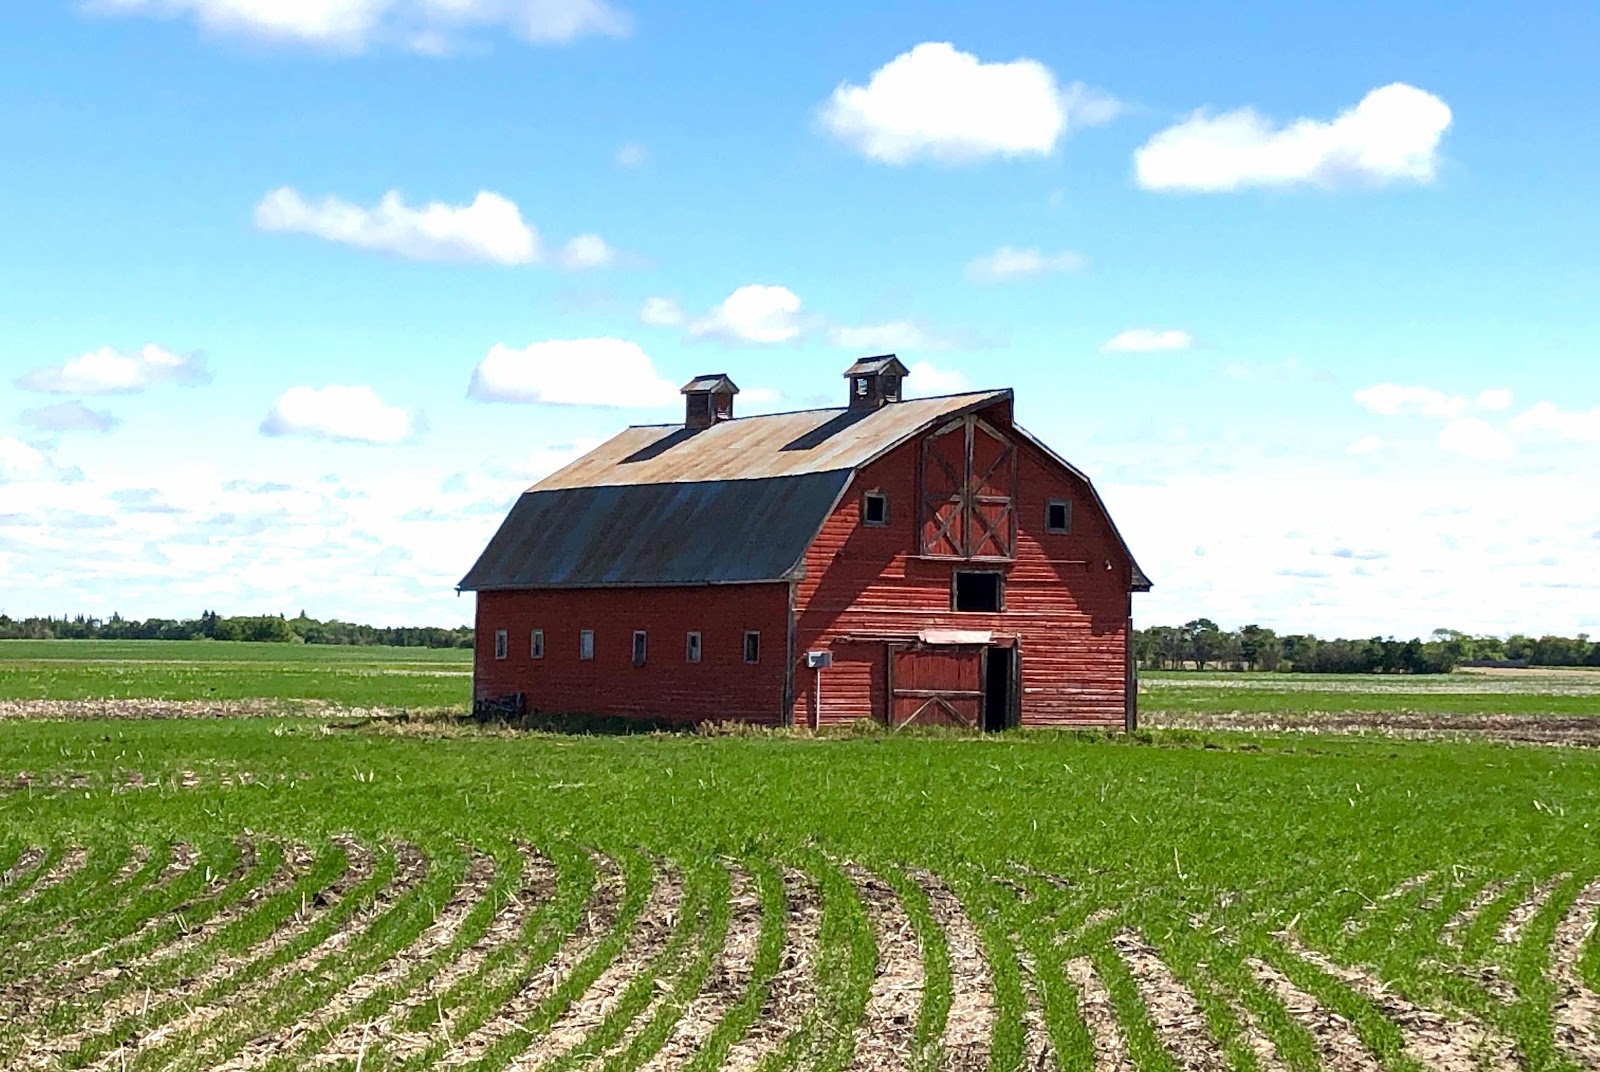 Abandon farms, Saskatchewan history, country living, old red barn, farm life